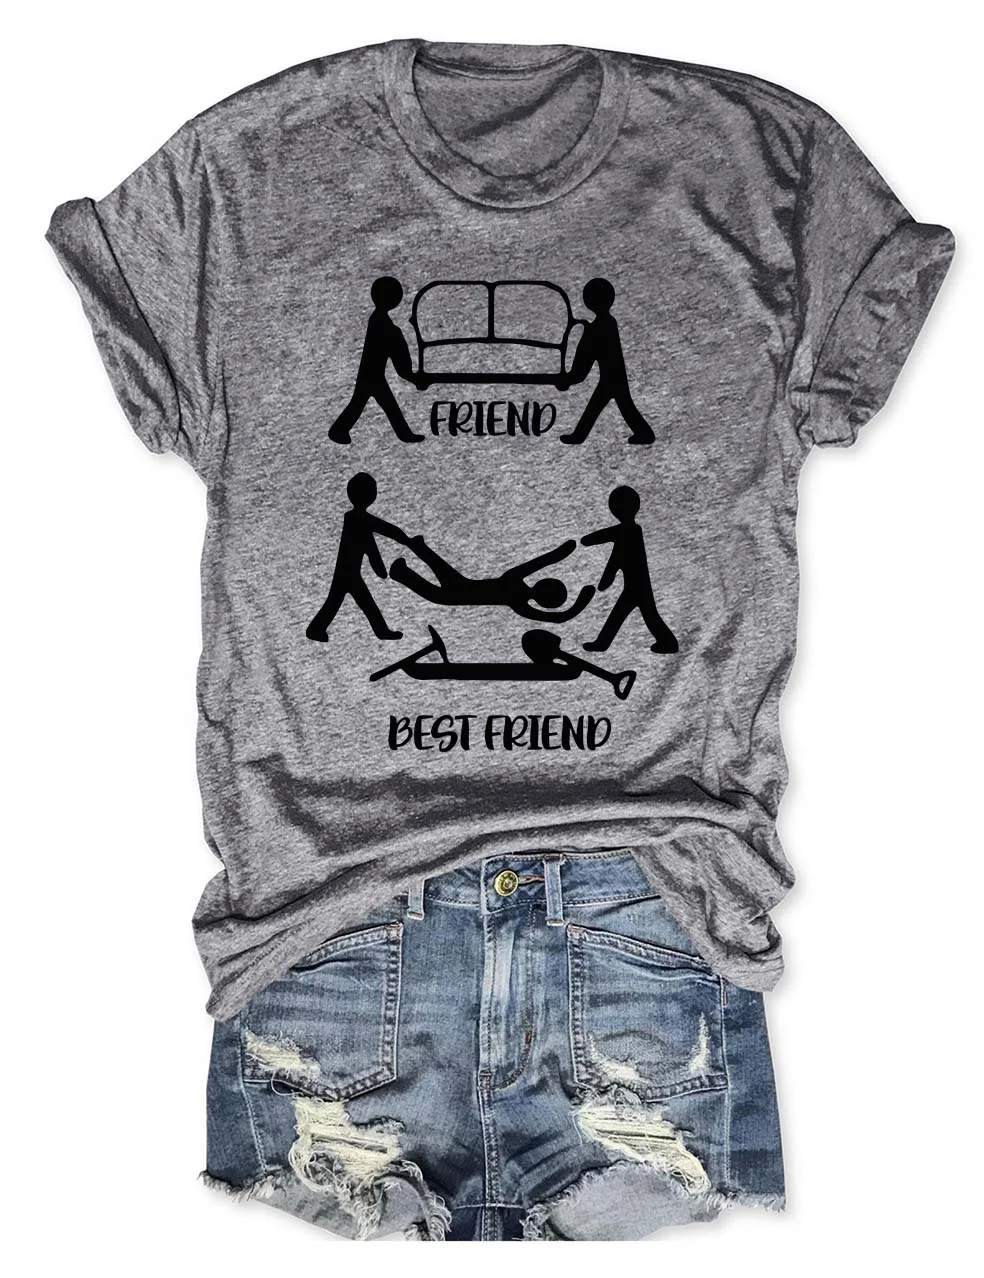 Friend And Best Friend T-Shirt